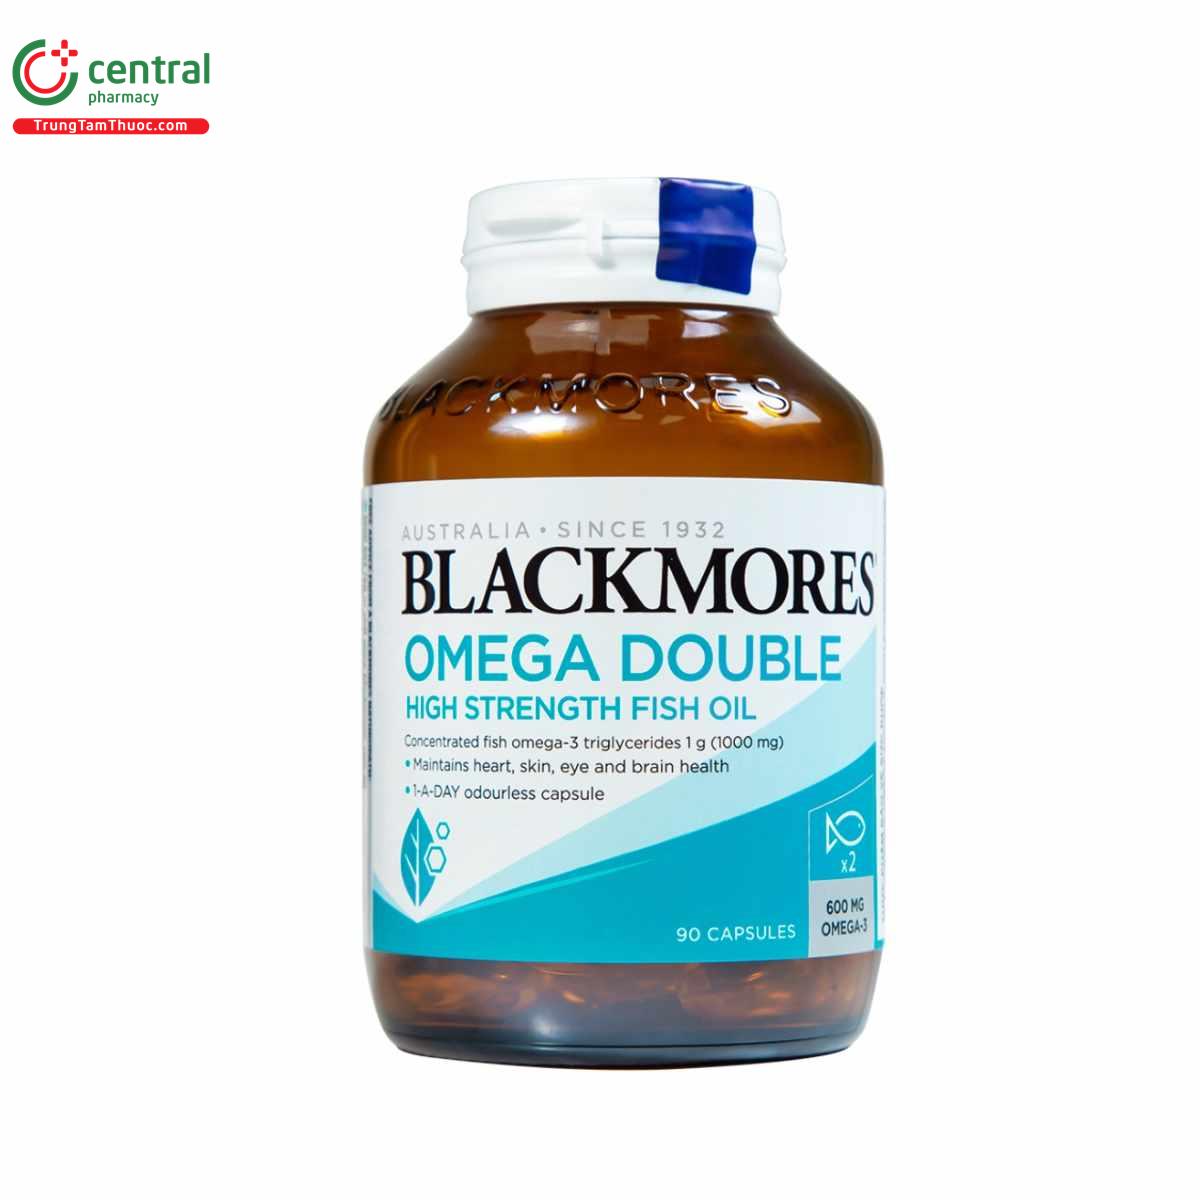 blackmores omega double high strength fish oil 1 K4630